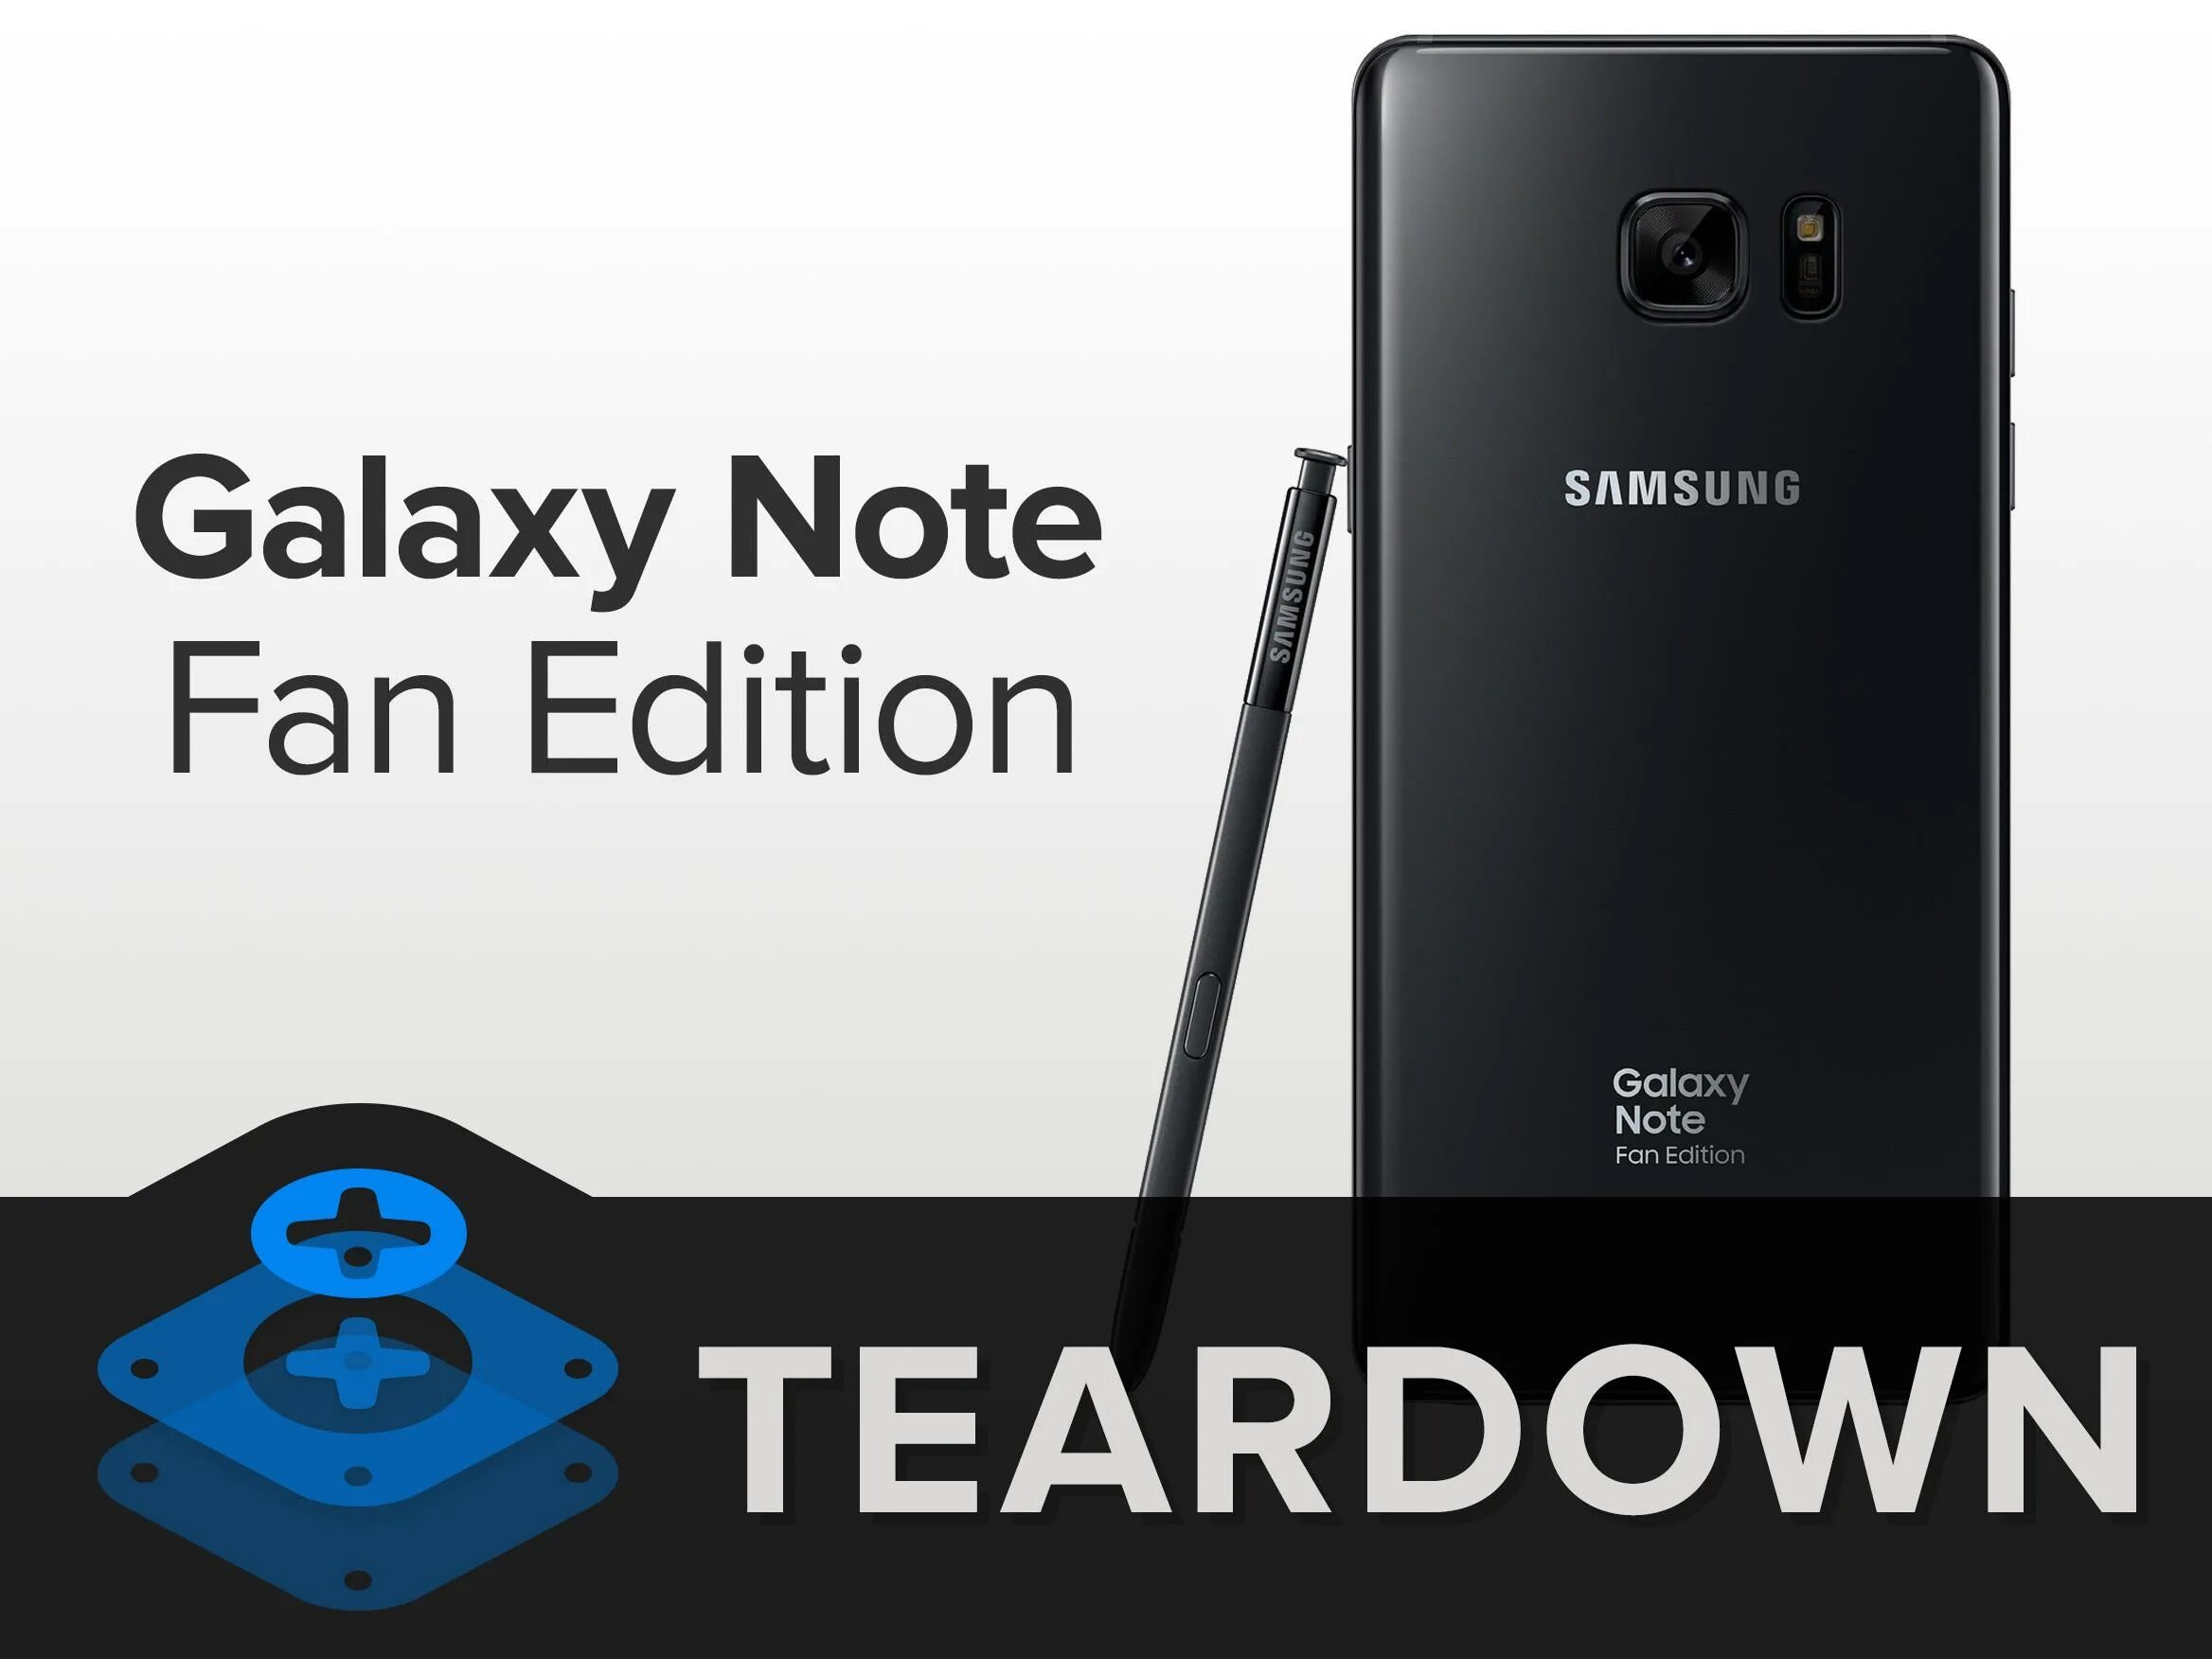 Galaxy note edition. Galaxy Note 7 Fan Edition. Самсунг Fan Edition. Samsung Galaxy Note Fe. Galaxy Note Fan Edition.